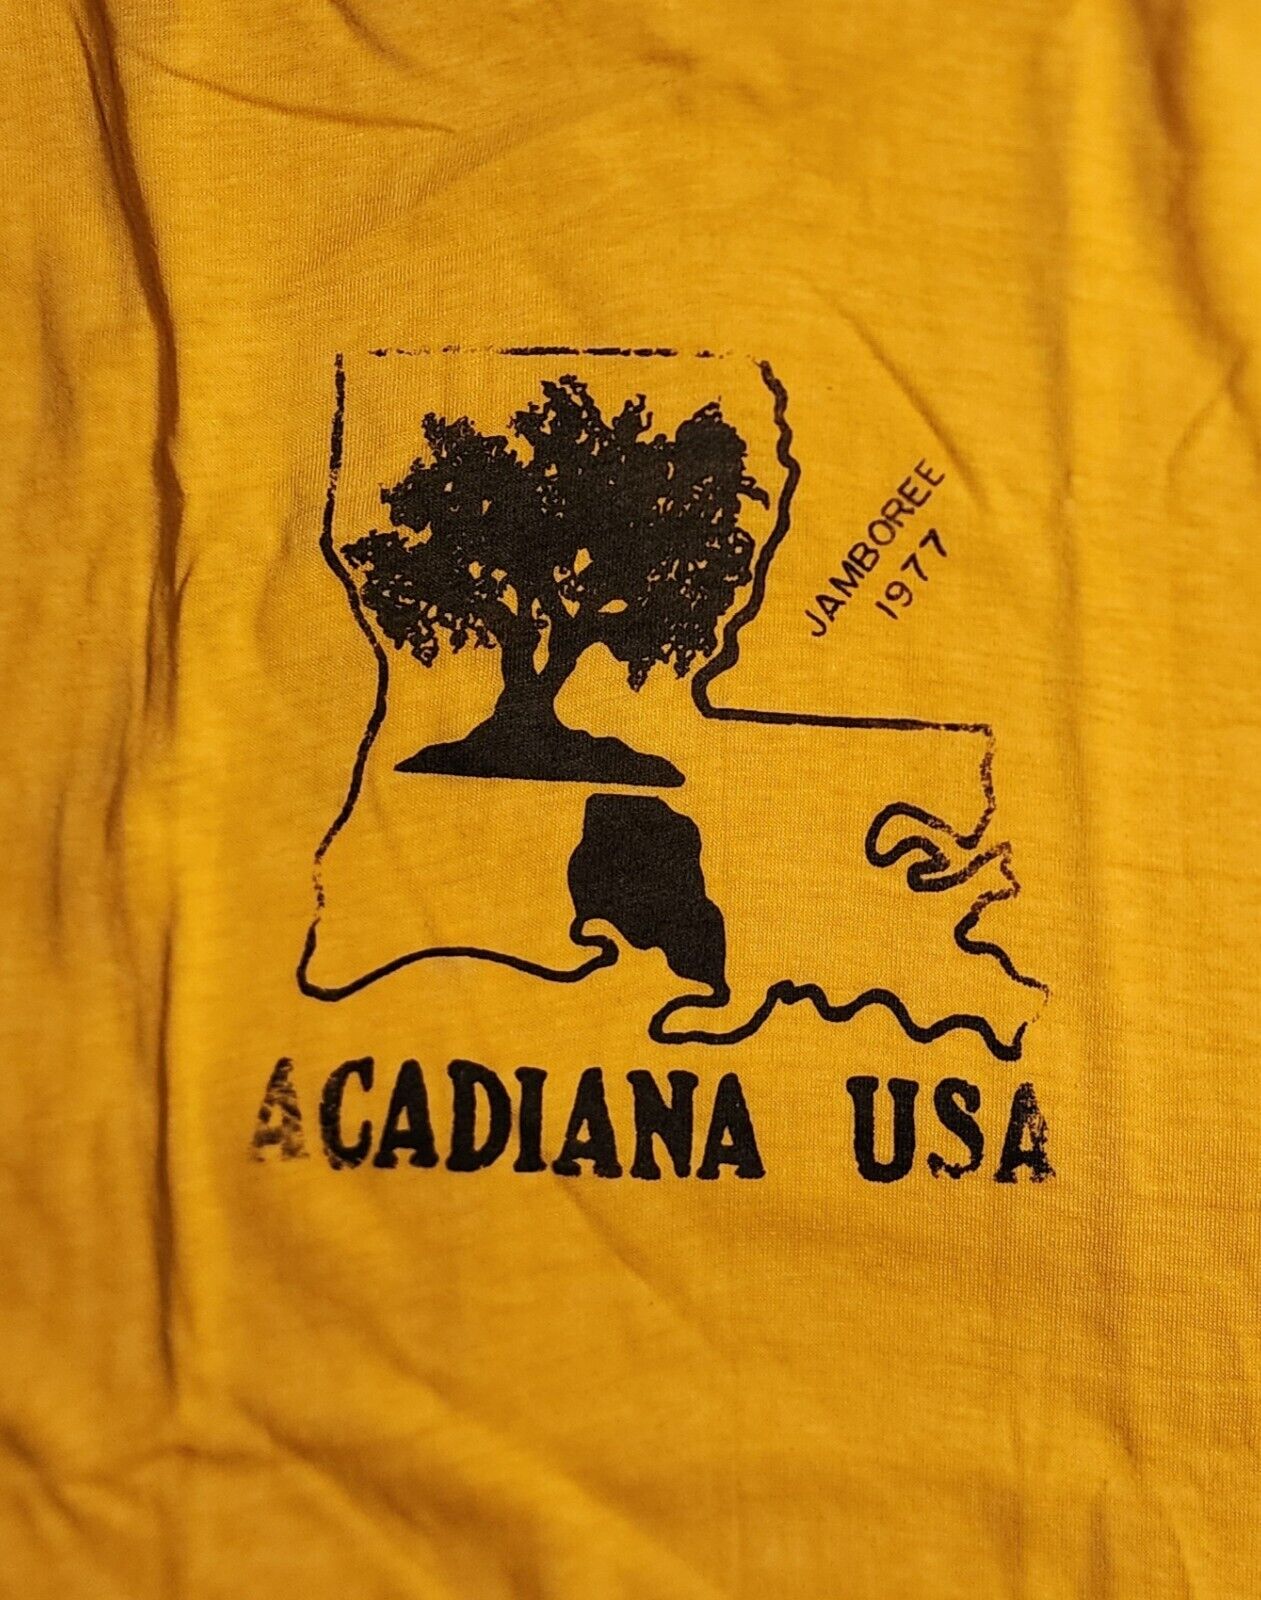 1977 National Scout Jamboree T-Shirt - ACADIANA COUNCIL